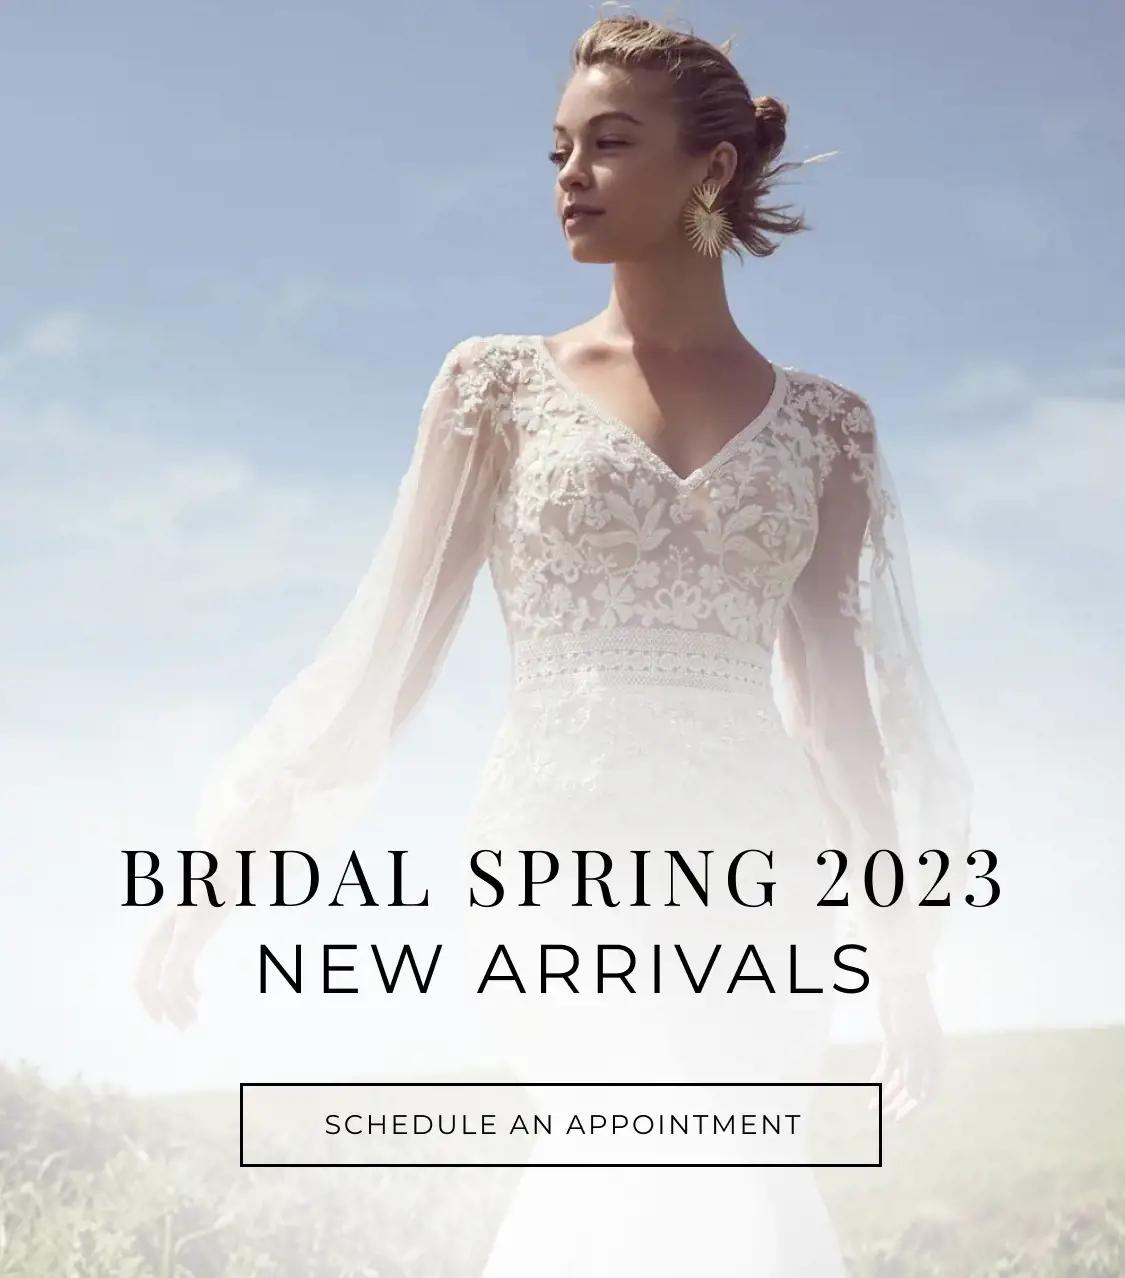 "Bridal Spring 2023" banner for mobile